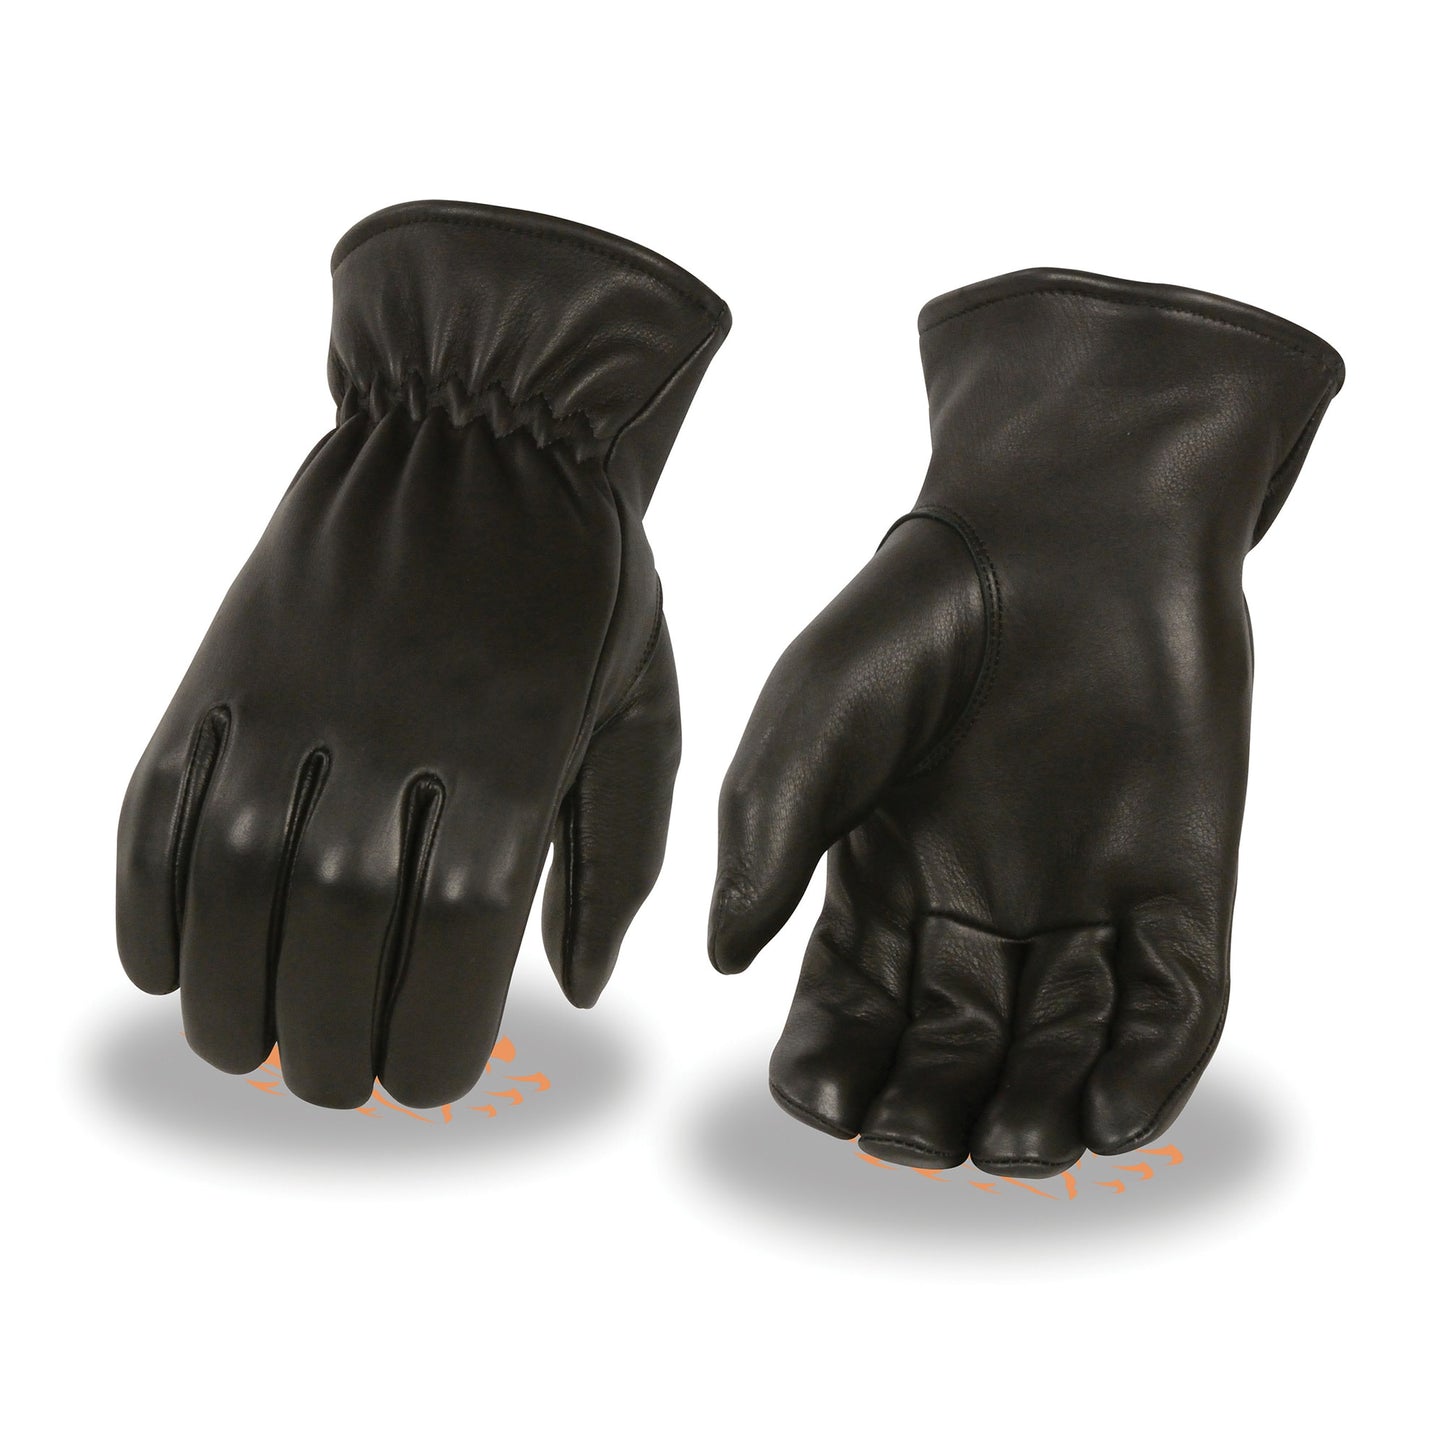 Gloves (SH858) - Men’s Deerskin Thermal Lined Gloves with Cinch Wrist